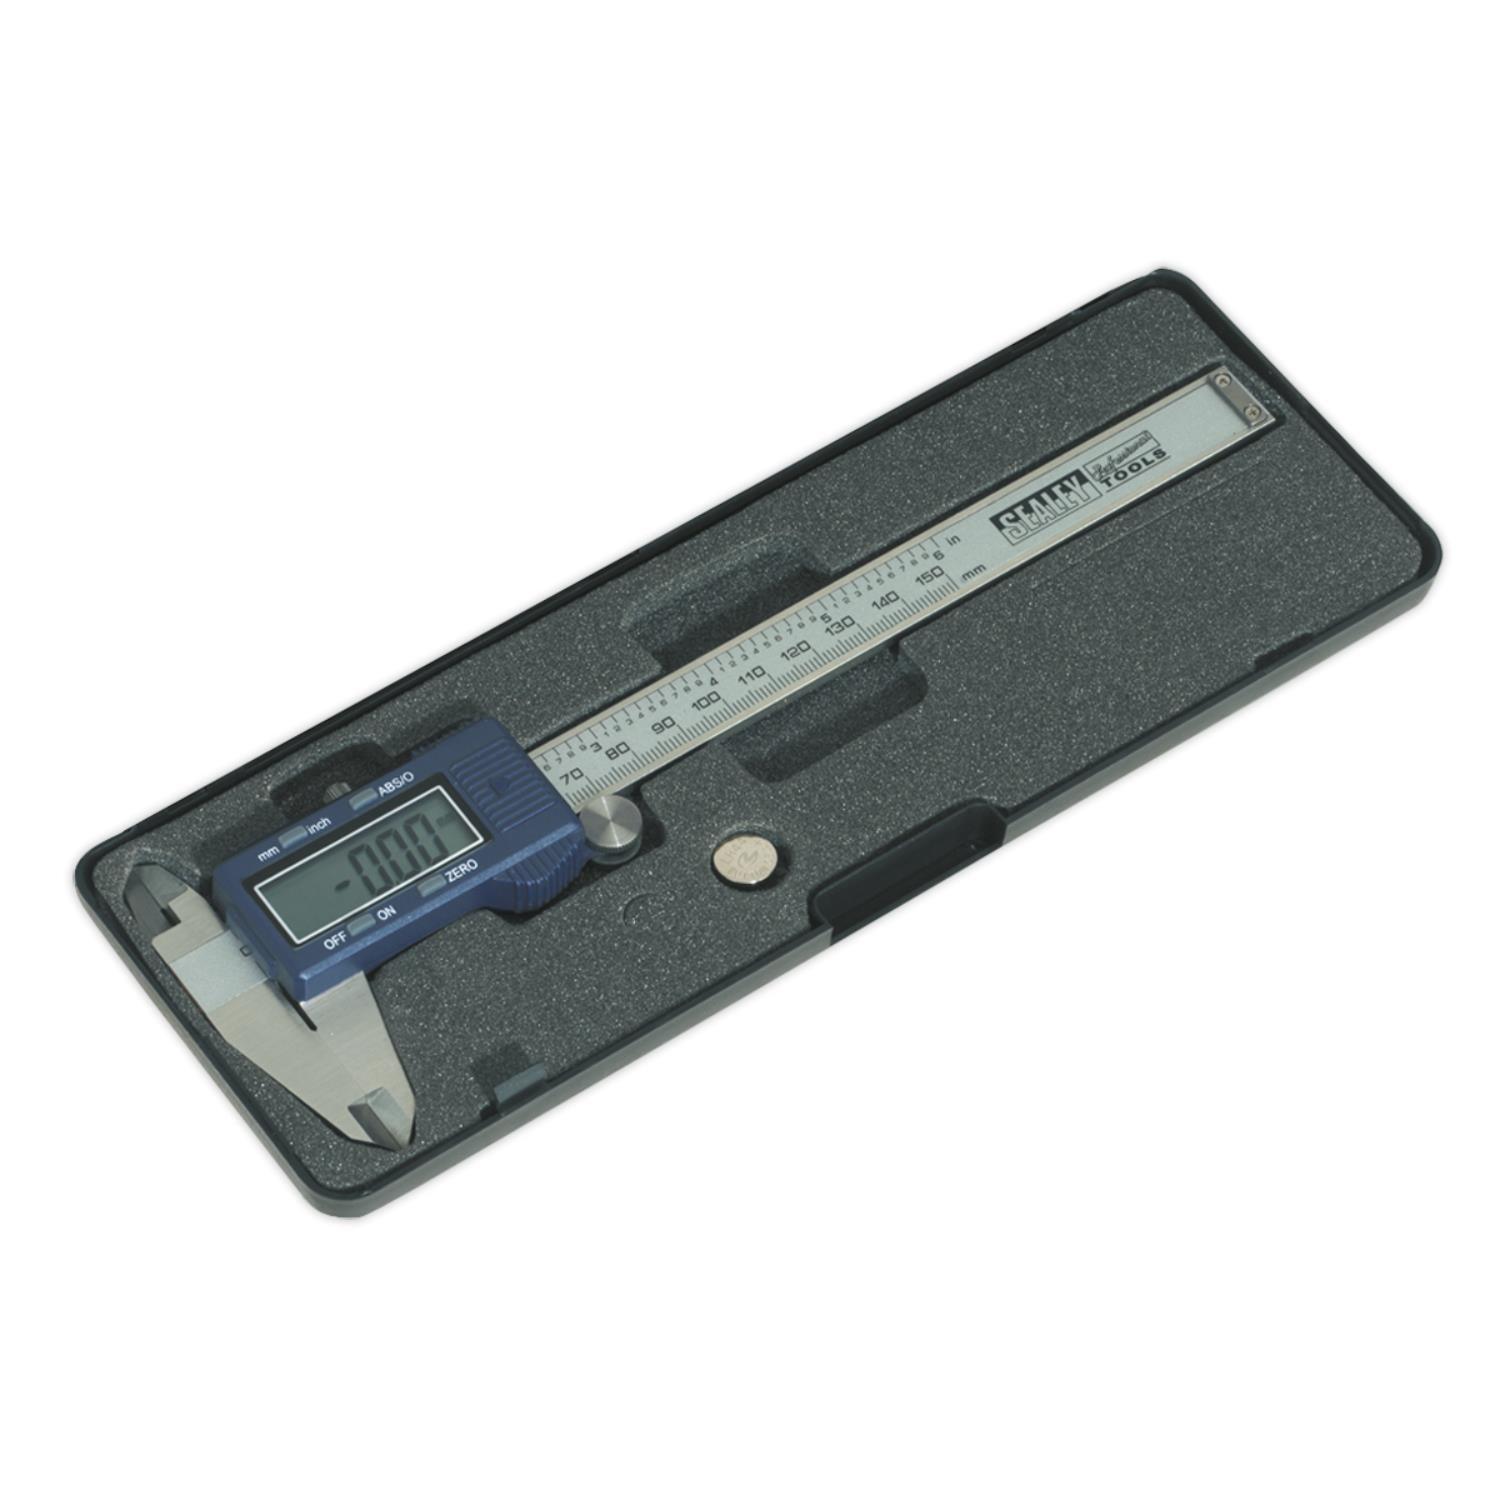 Sealey Digital Vernier Calliper 0-150mm/0-6" High Precision Tool AK962EV - Tools 2U Direct SW